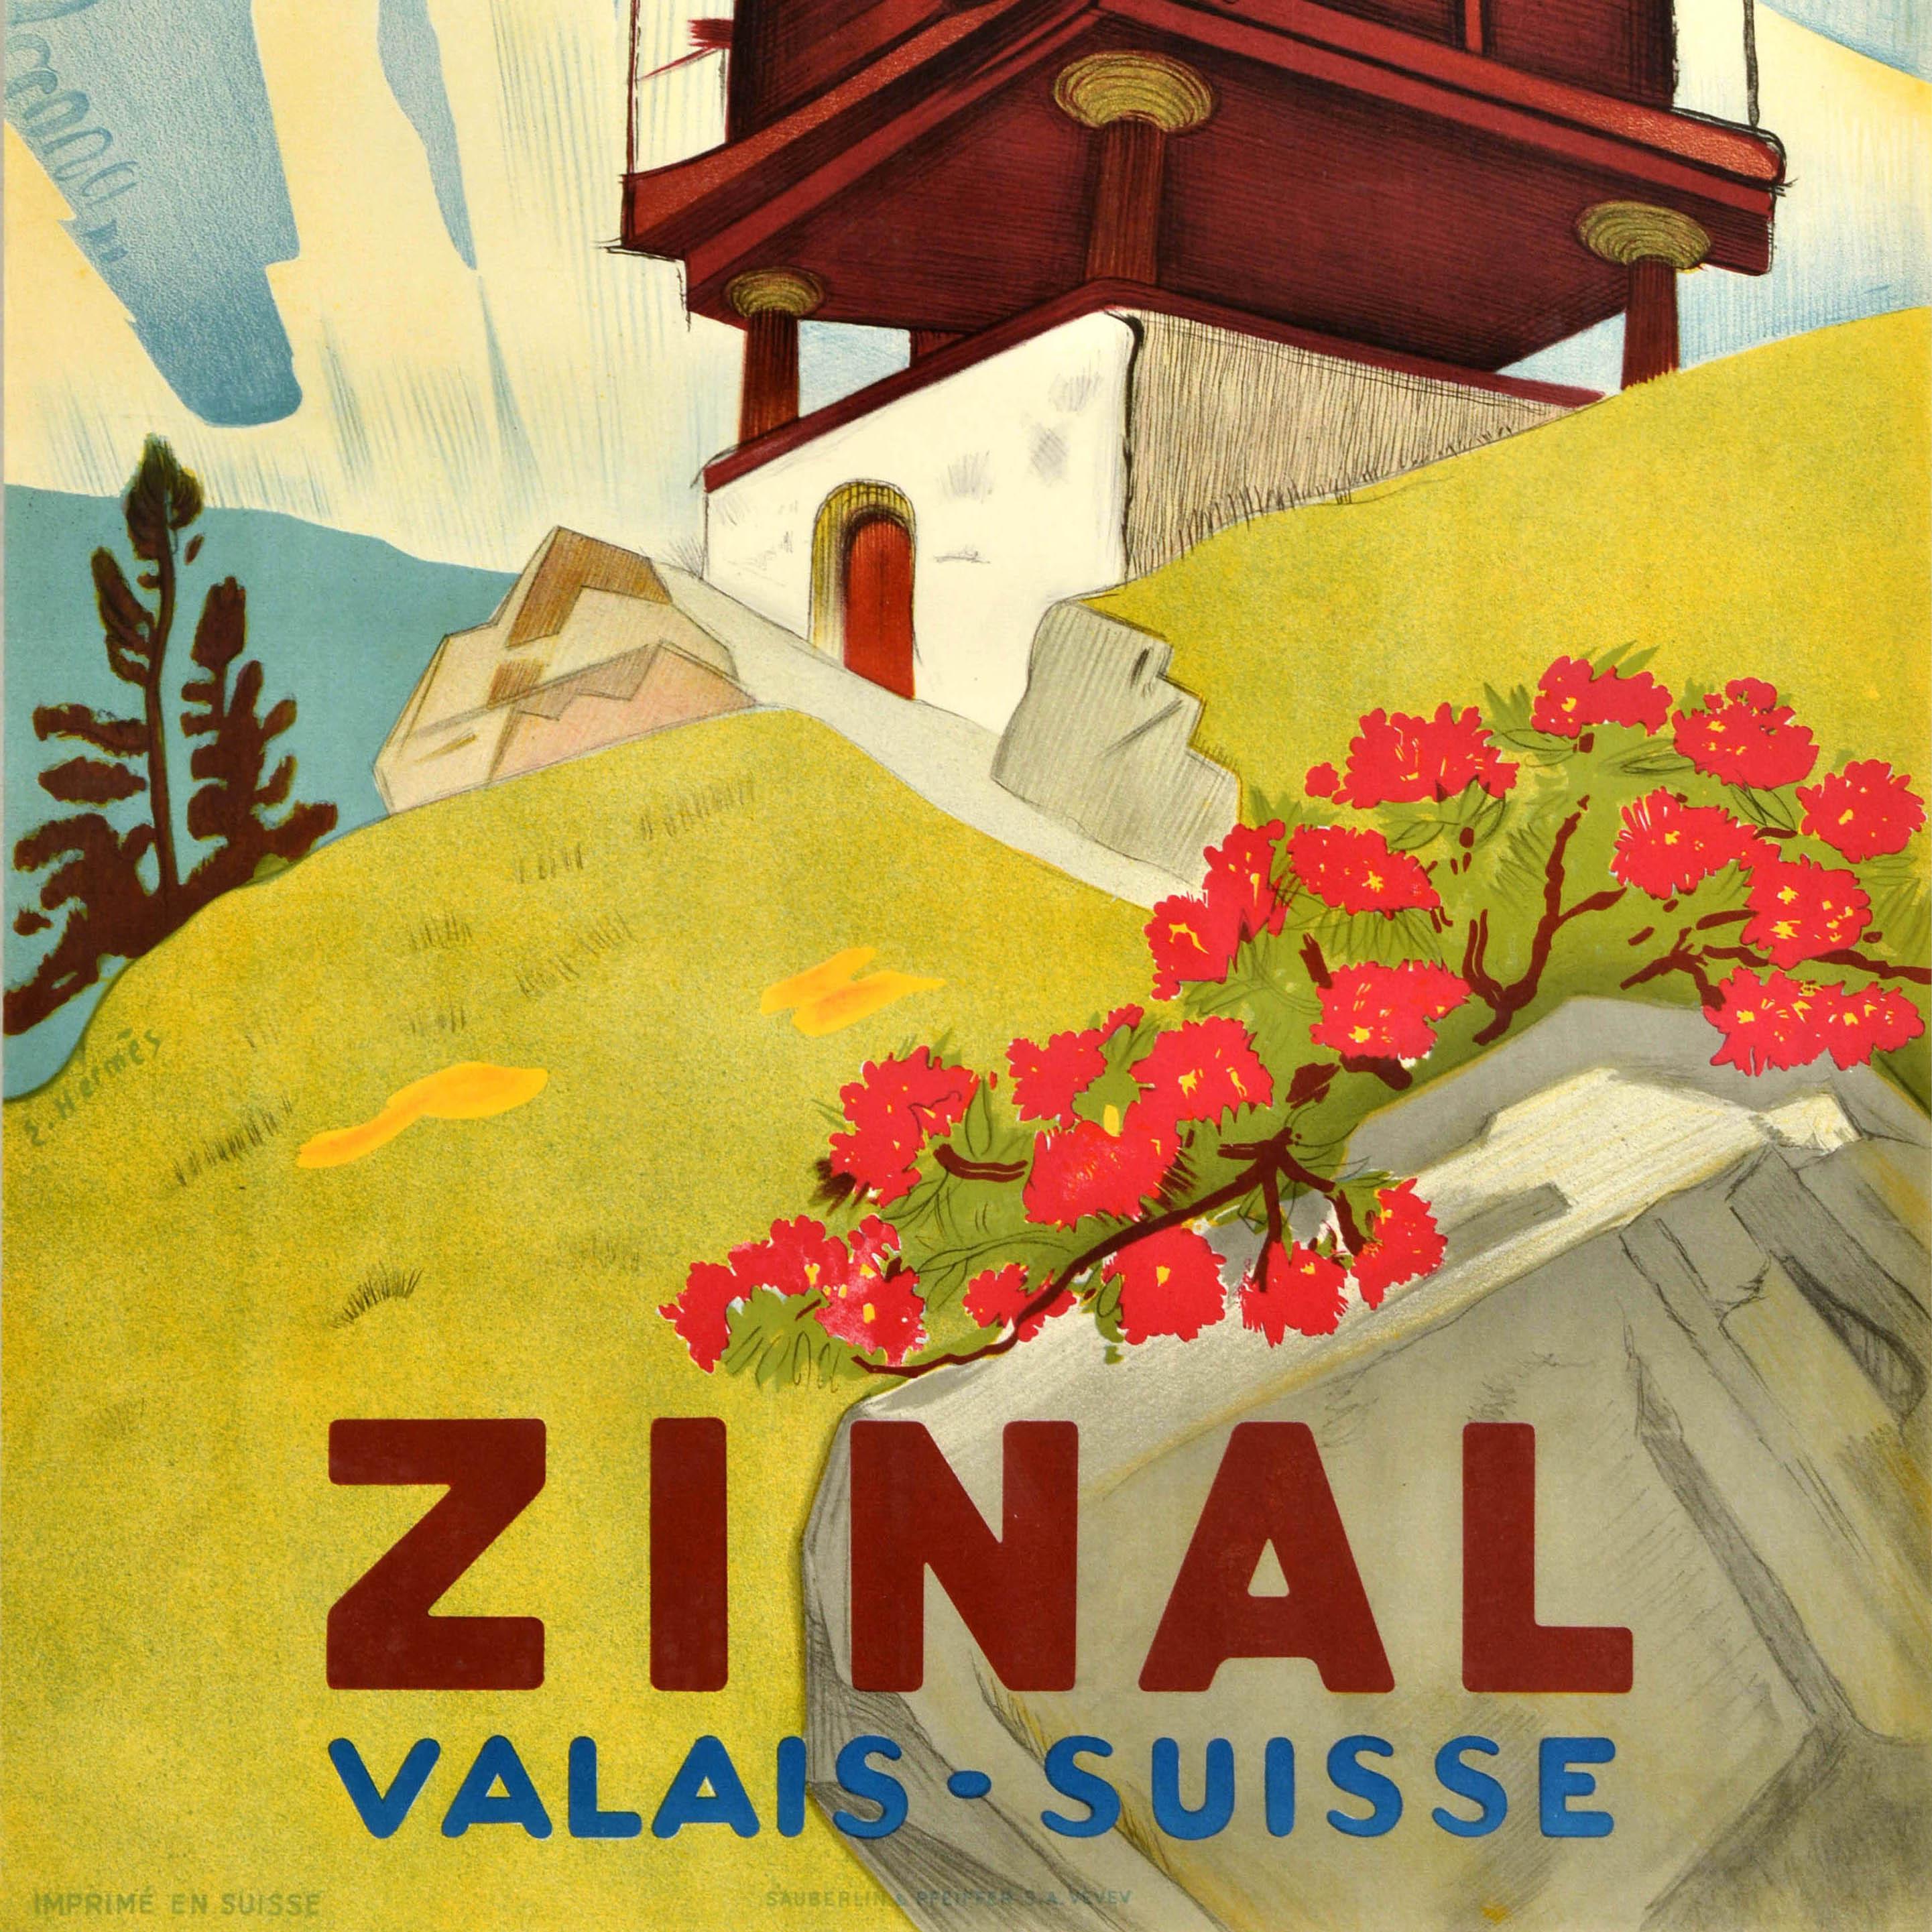 Mid-20th Century Original Vintage Travel Advertising Poster Zinal Valais Suisse Switzerland Swiss